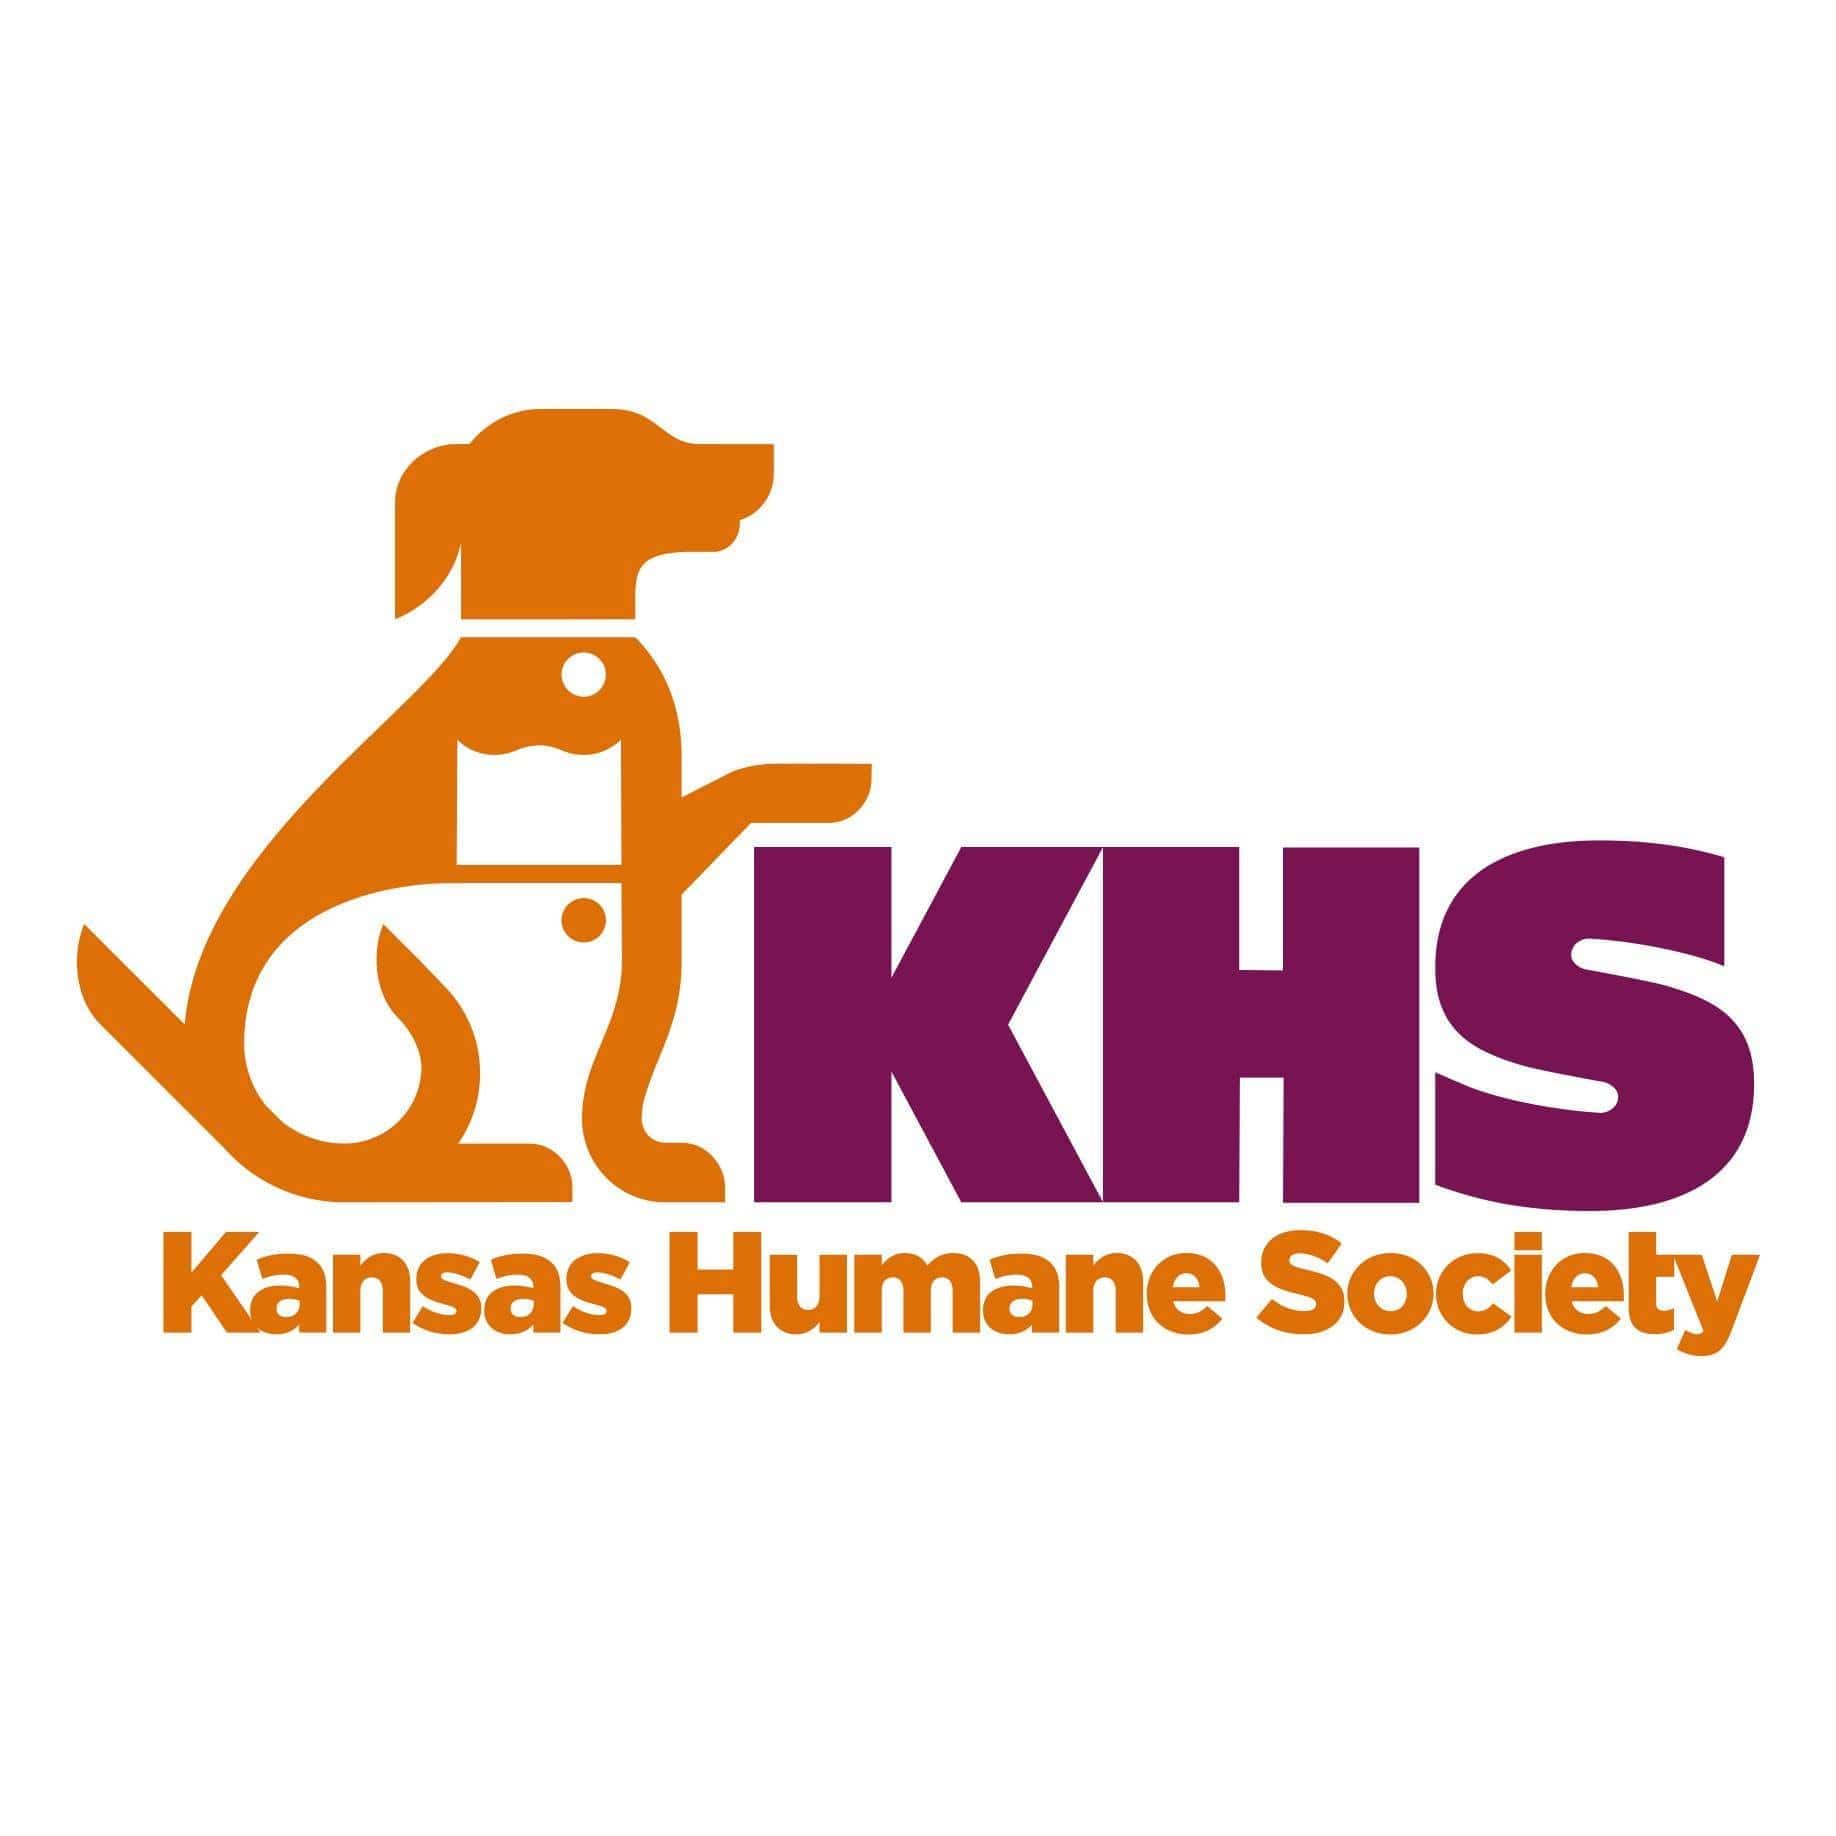 Wichita humane society kaiser permanente oxnard pharmacy